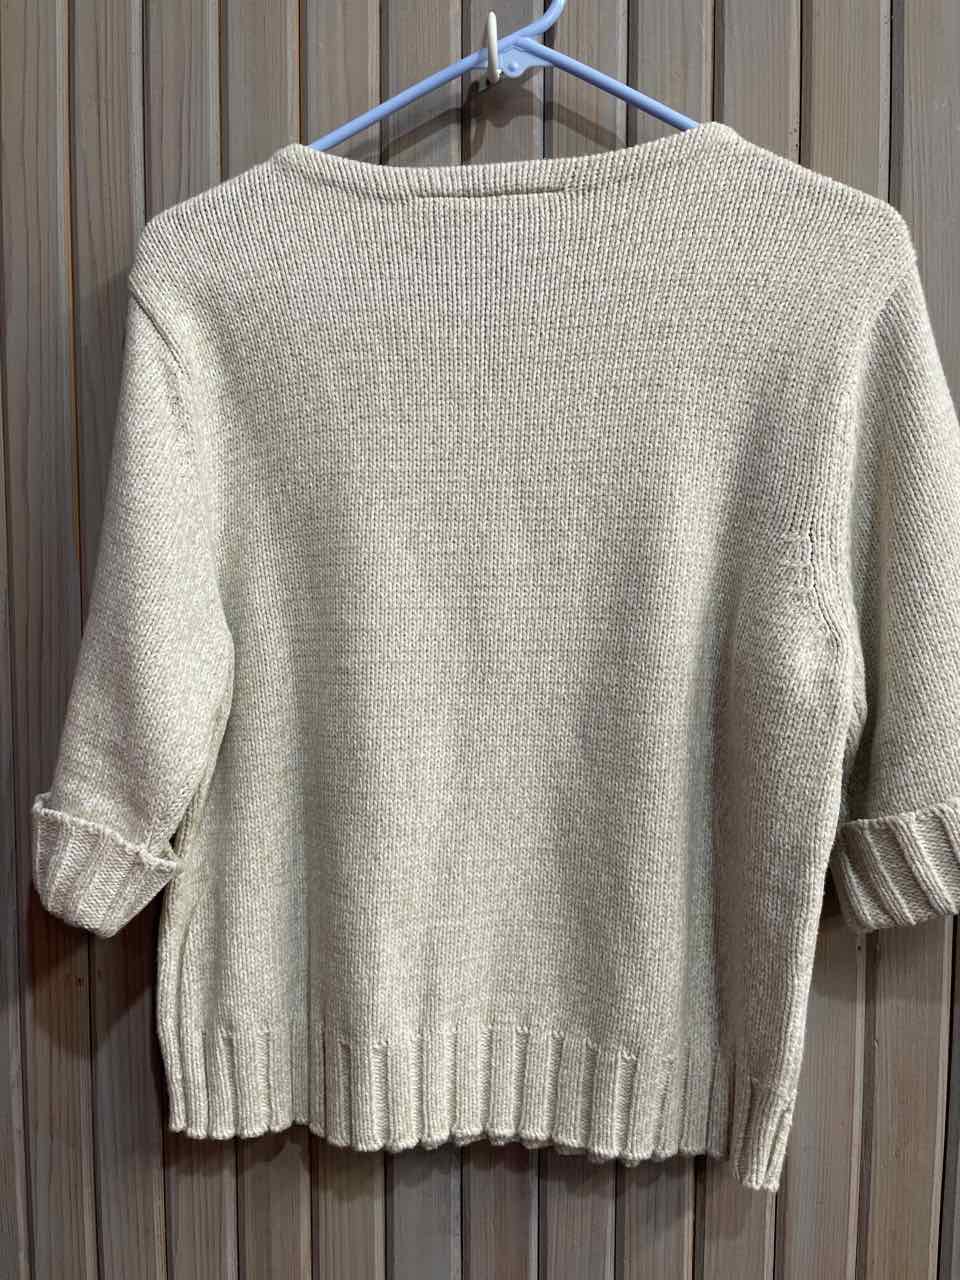 XL - Liz Claiborne Sweater